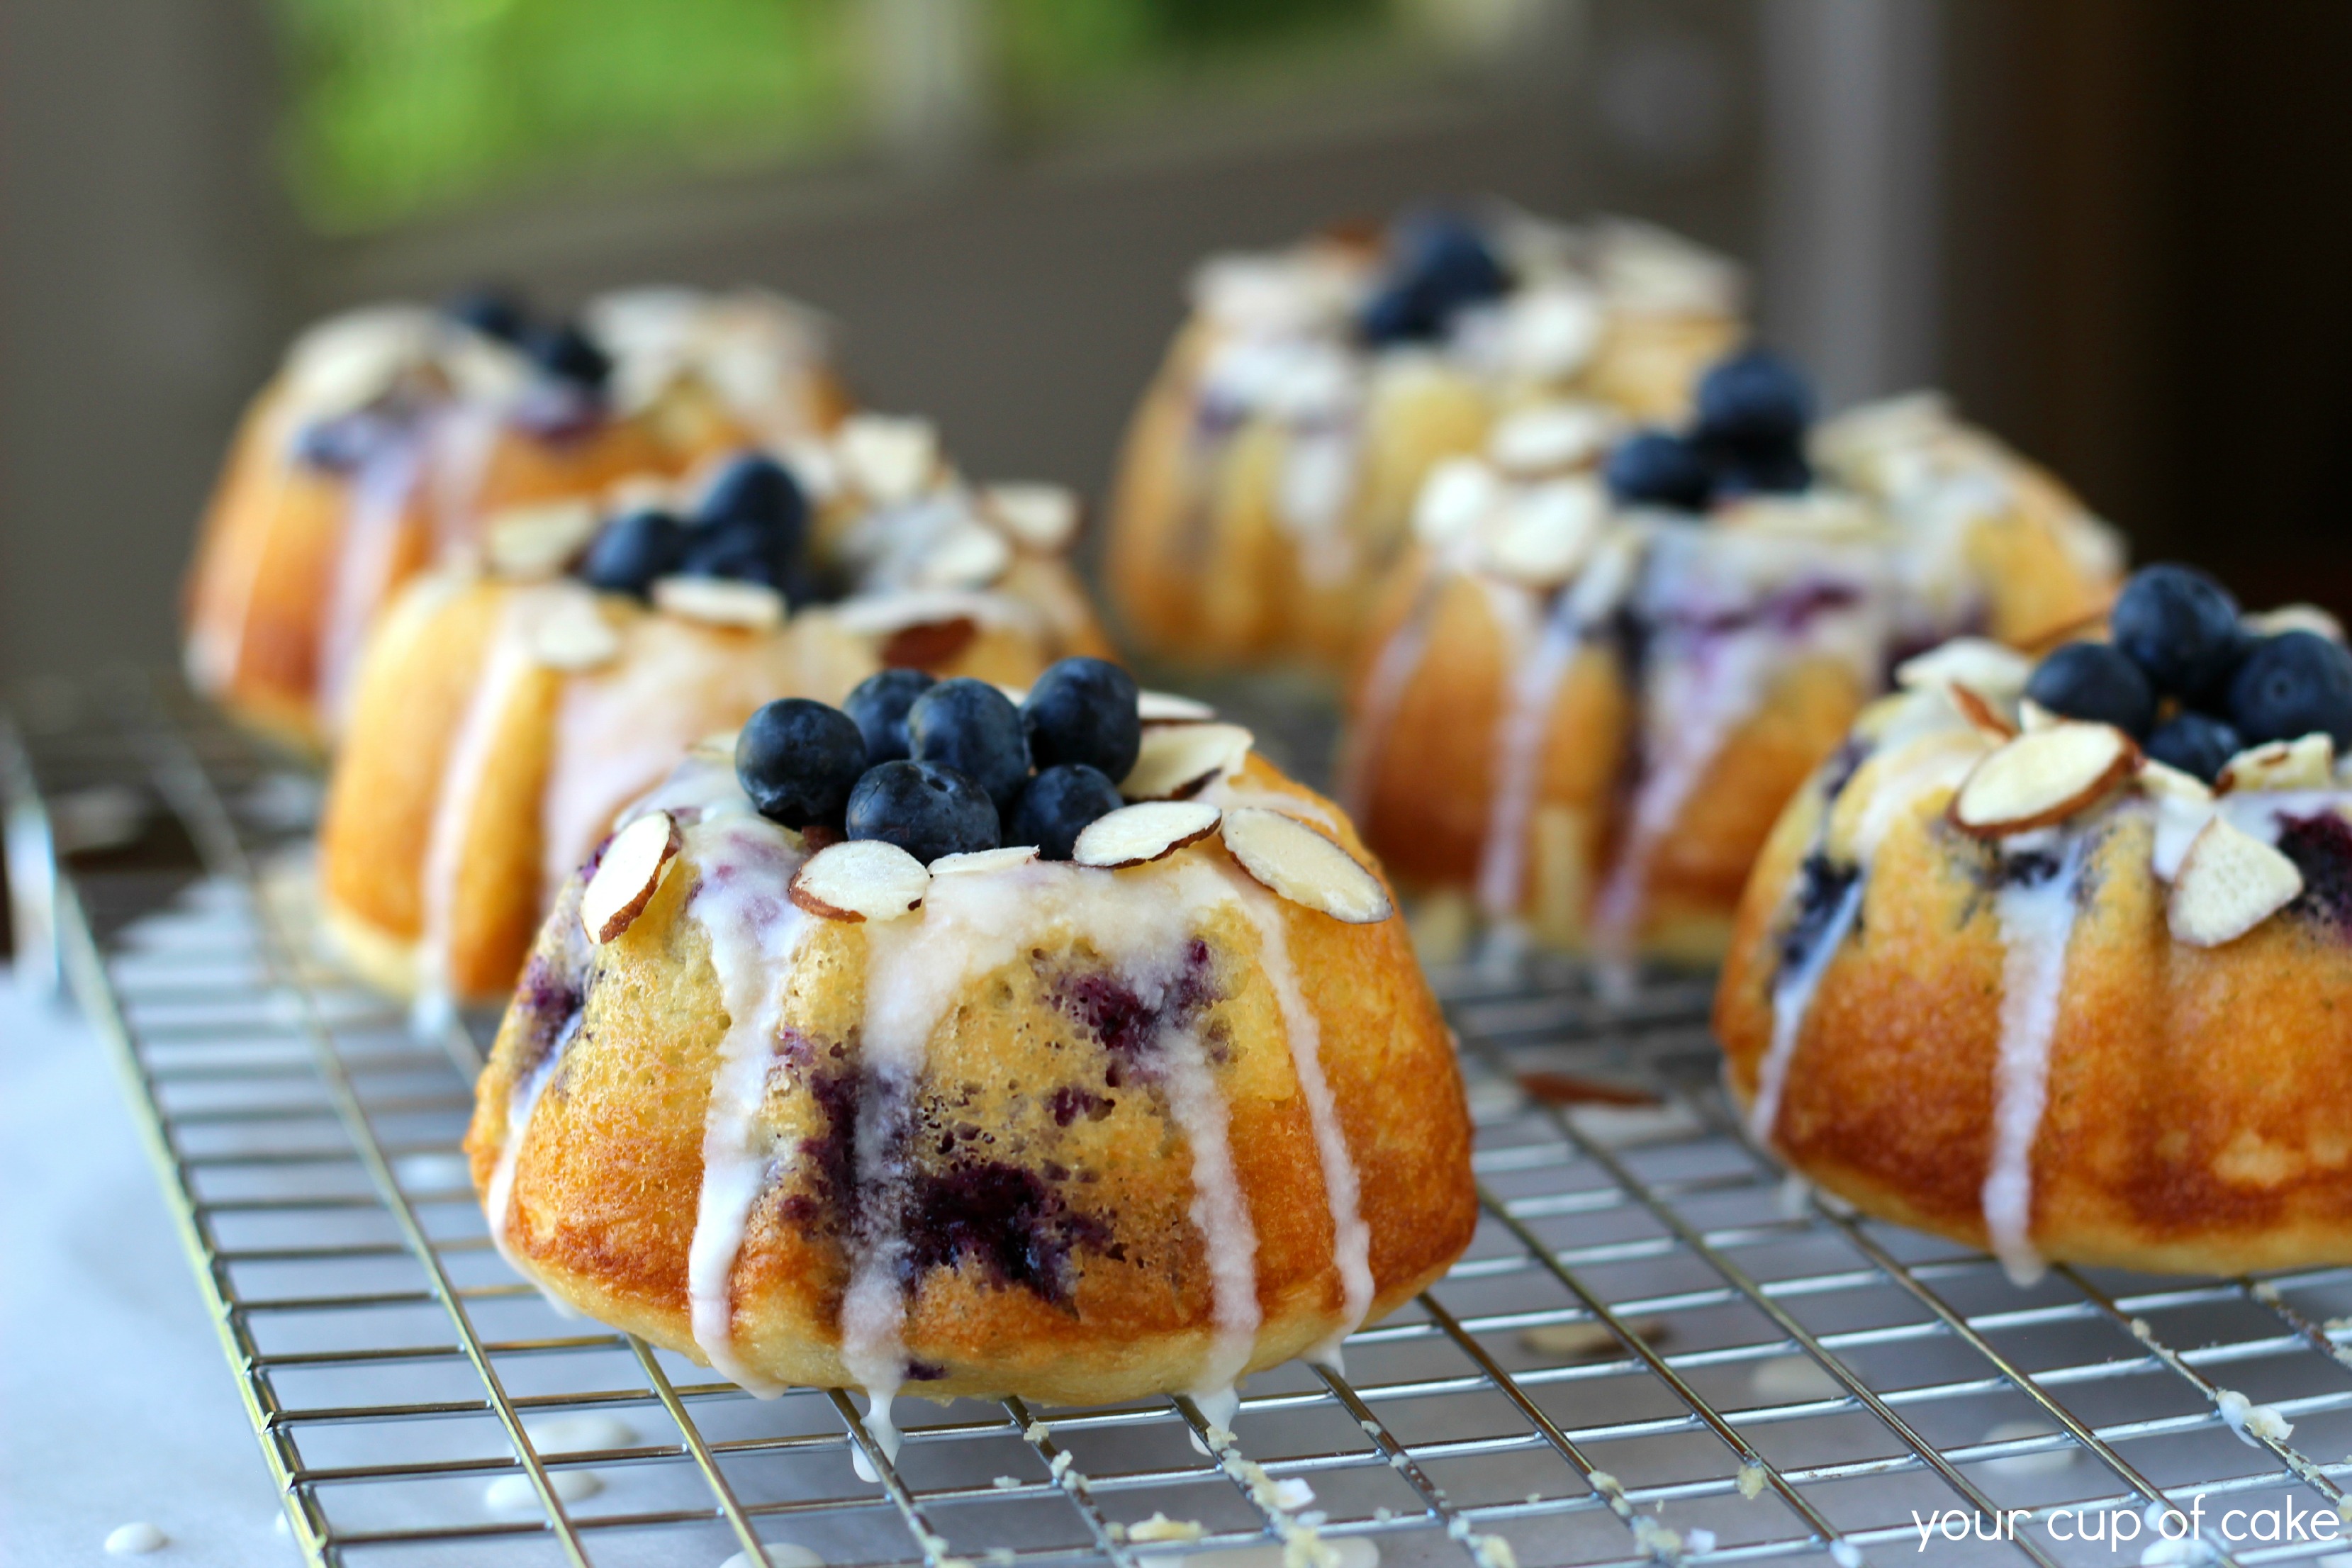 https://www.yourcupofcake.com/wp-content/uploads/2013/06/Blueberry-Almond-Bundt-Cake-Recipe.jpg